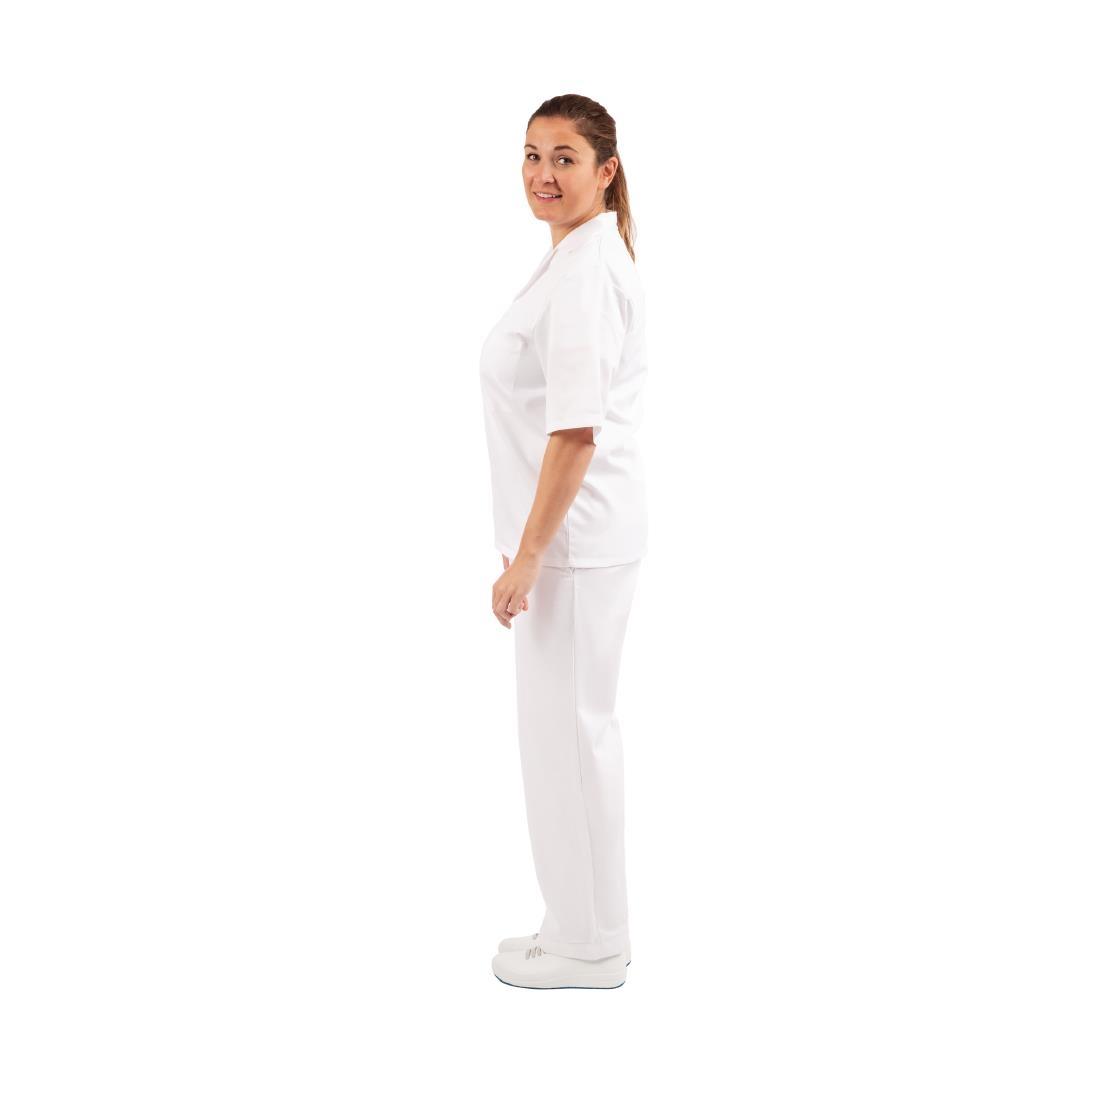 Unisex Bakers Shirt White XL - A102-XL  - 3